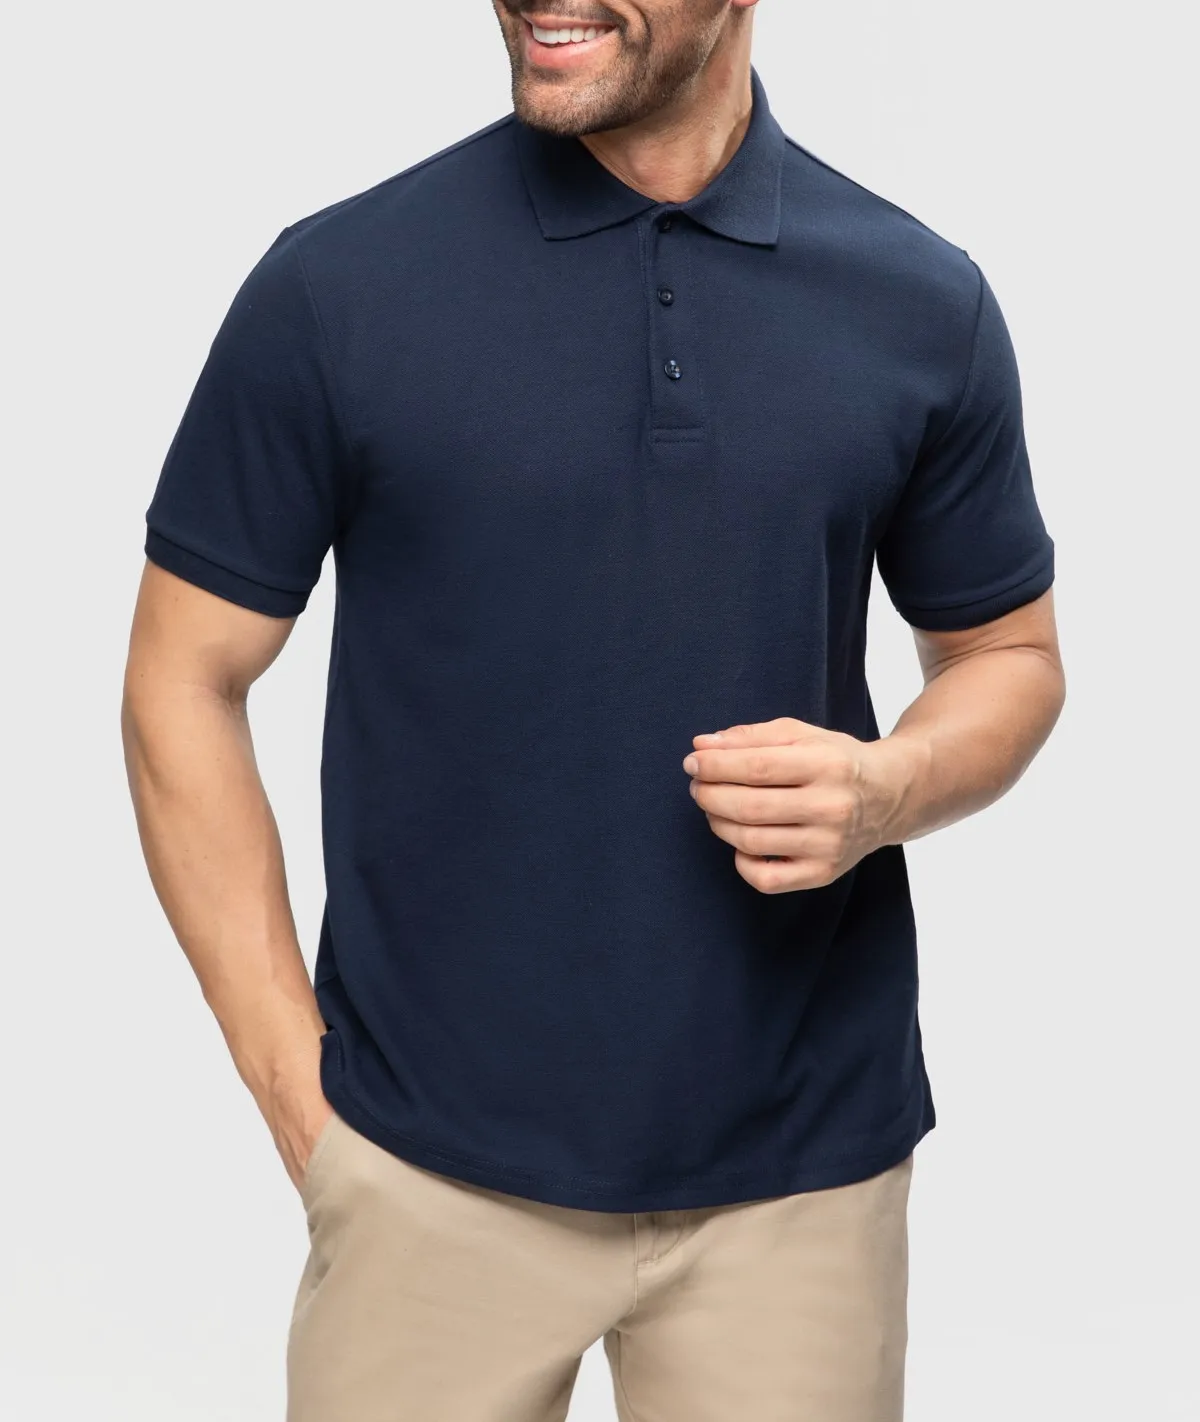 

FASHIOPNSPARK Men's Regular-Fit Polo Shirt Quick-Dry Cotton Pique Athletic T-Shirt Summer Casual Moisture Wicking Golf Shirt